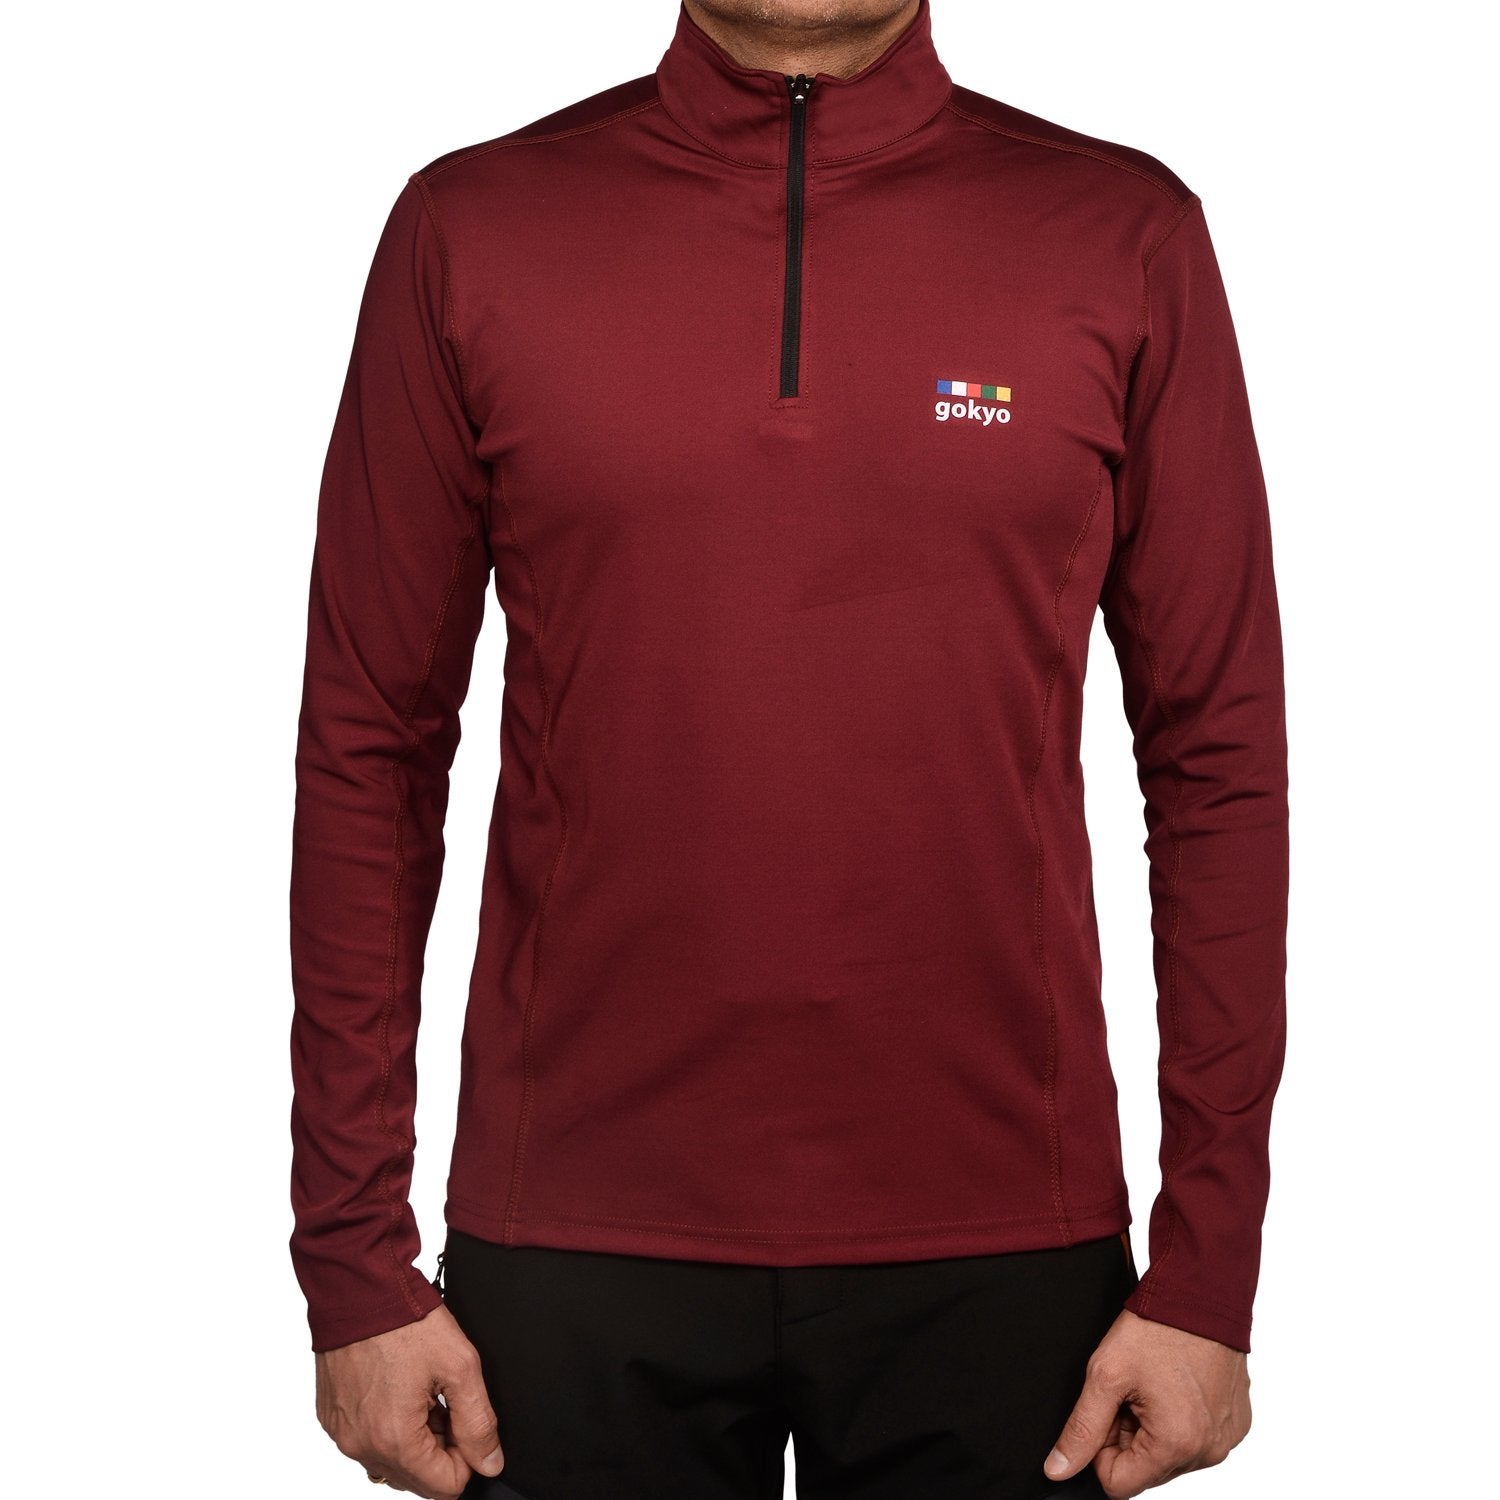 Buy Gokyo K2 Ultrasoft Trekking Tshirt Soft Red | Trekking & Hiking T-shirts at Gokyo Outdoor Clothing & Gear